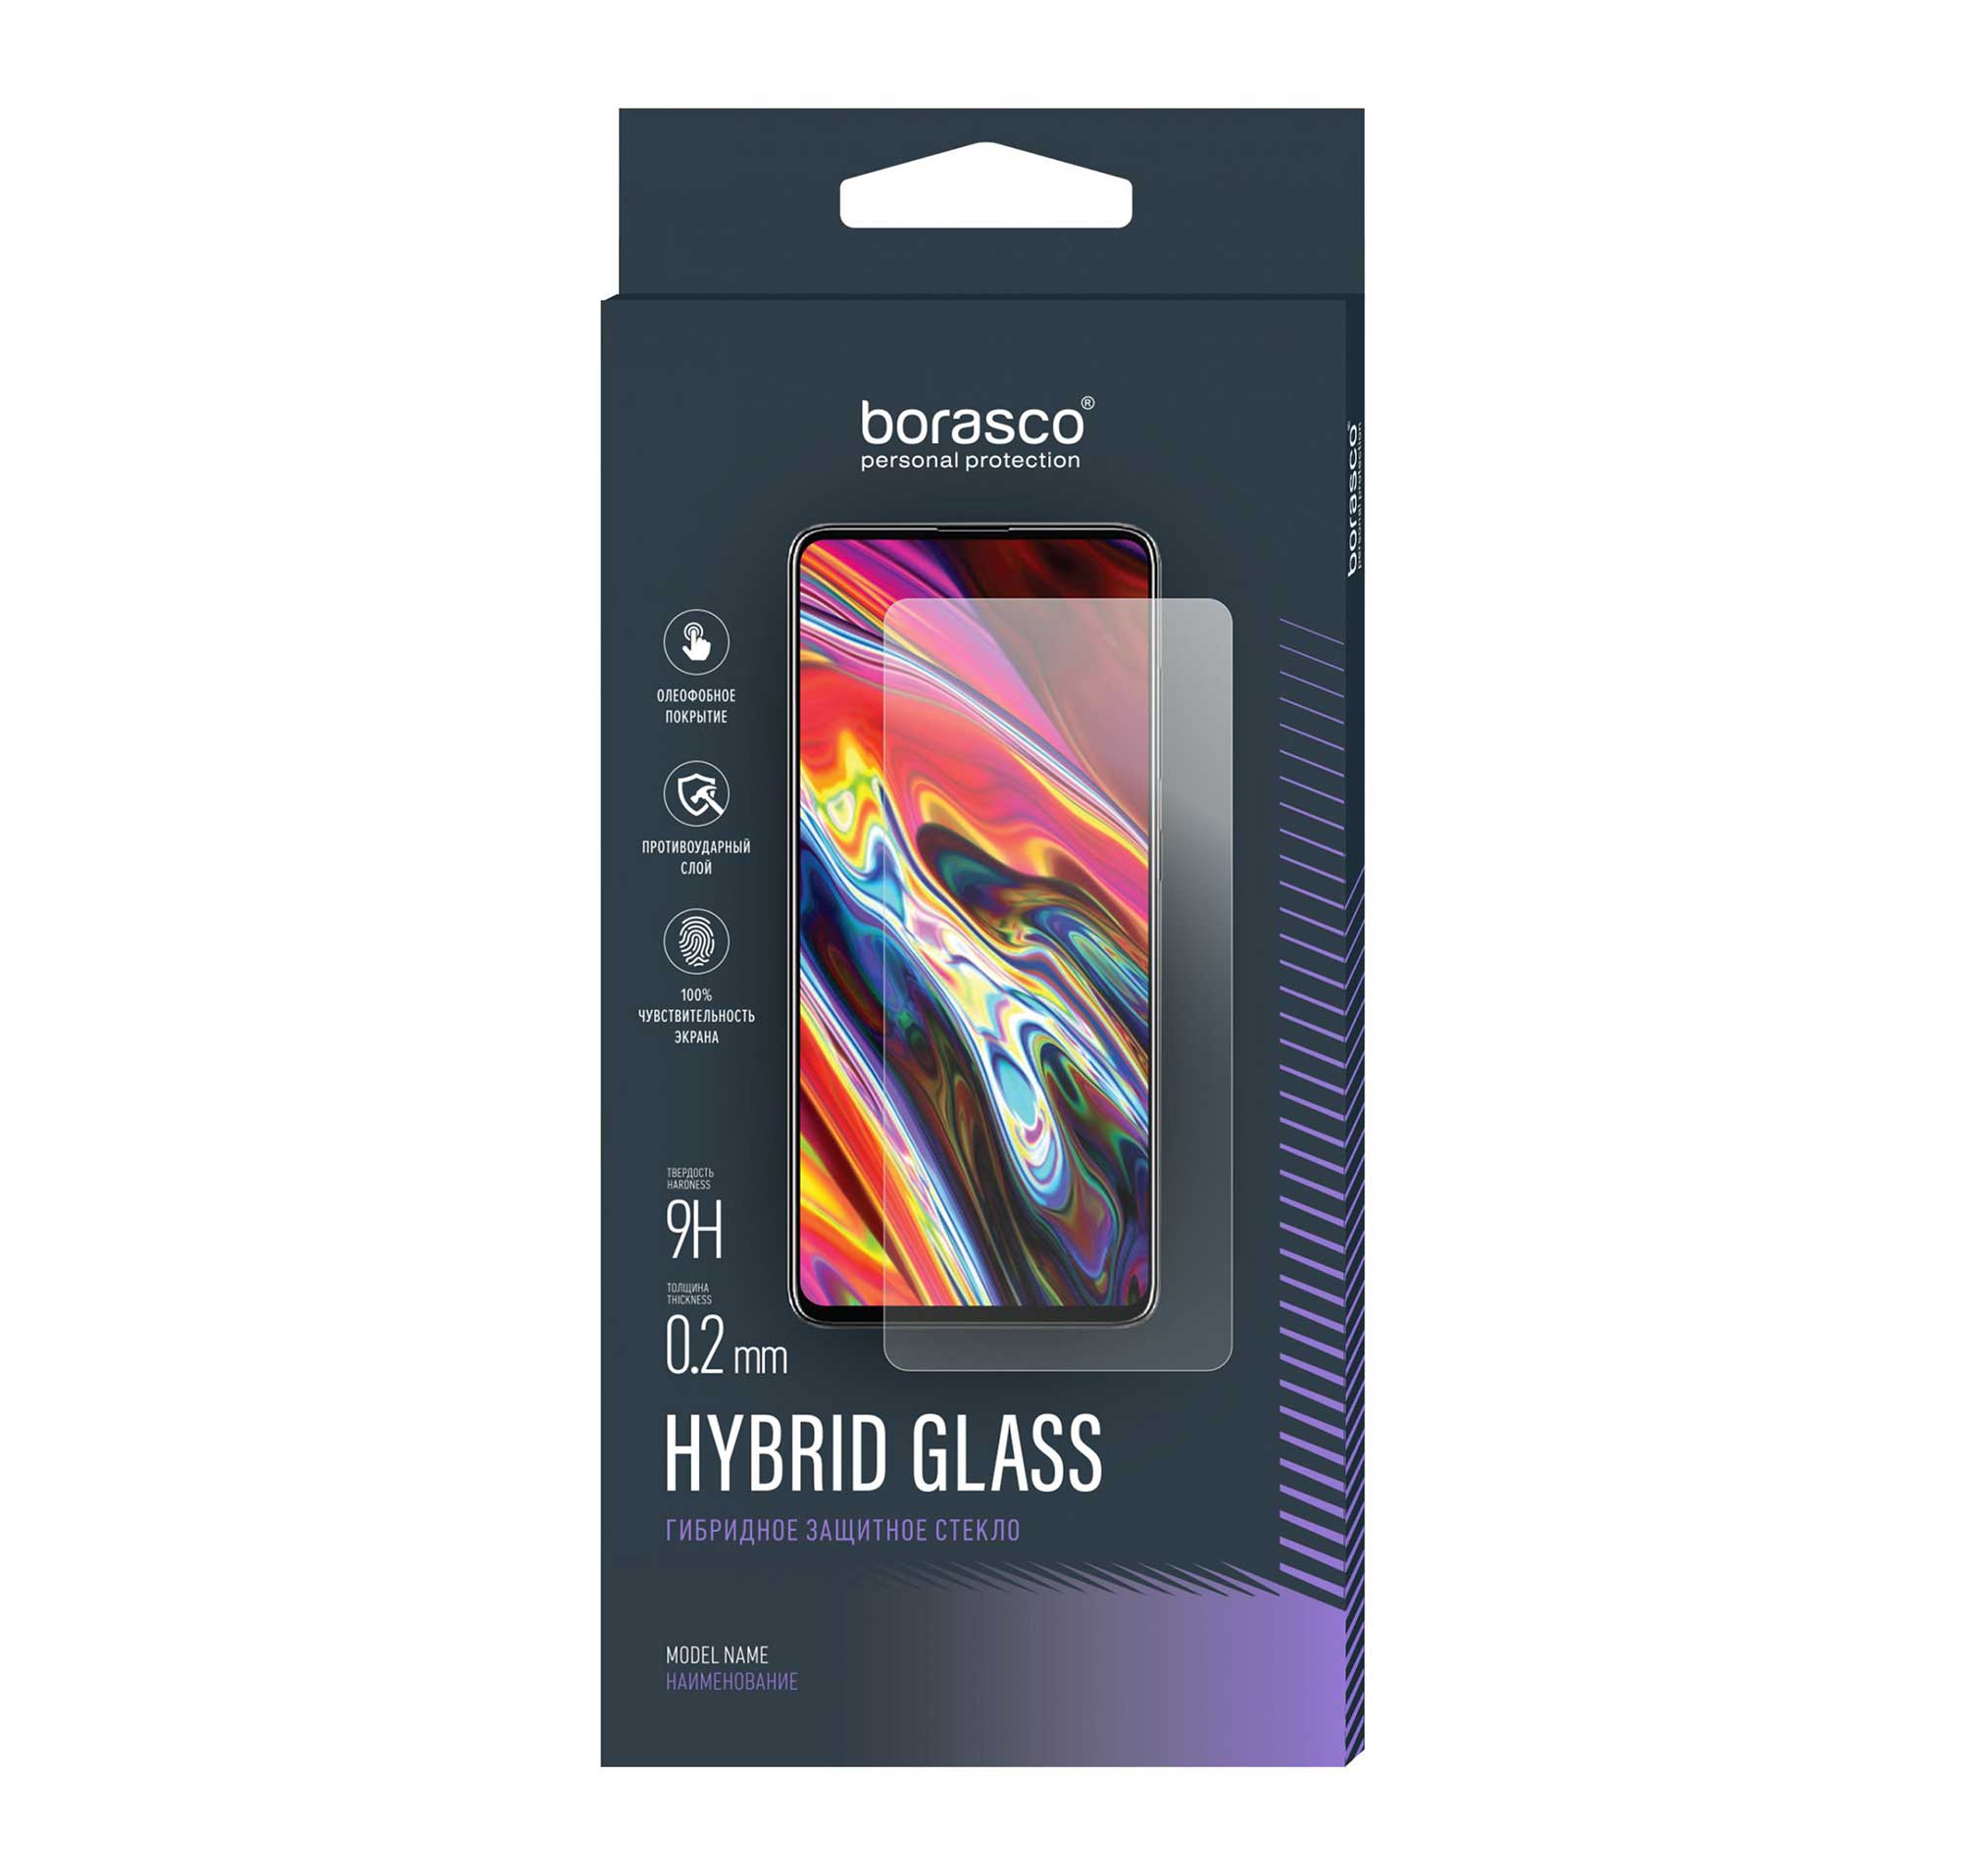 Защитное стекло Hybrid Glass для Xiaomi Mi 10T Lite защитное стекло закаленное стекло для xiaomi mi 11 lite 5g 10t mi 10t 11 lite pro защита экрана телефона mi 11 lite 5g